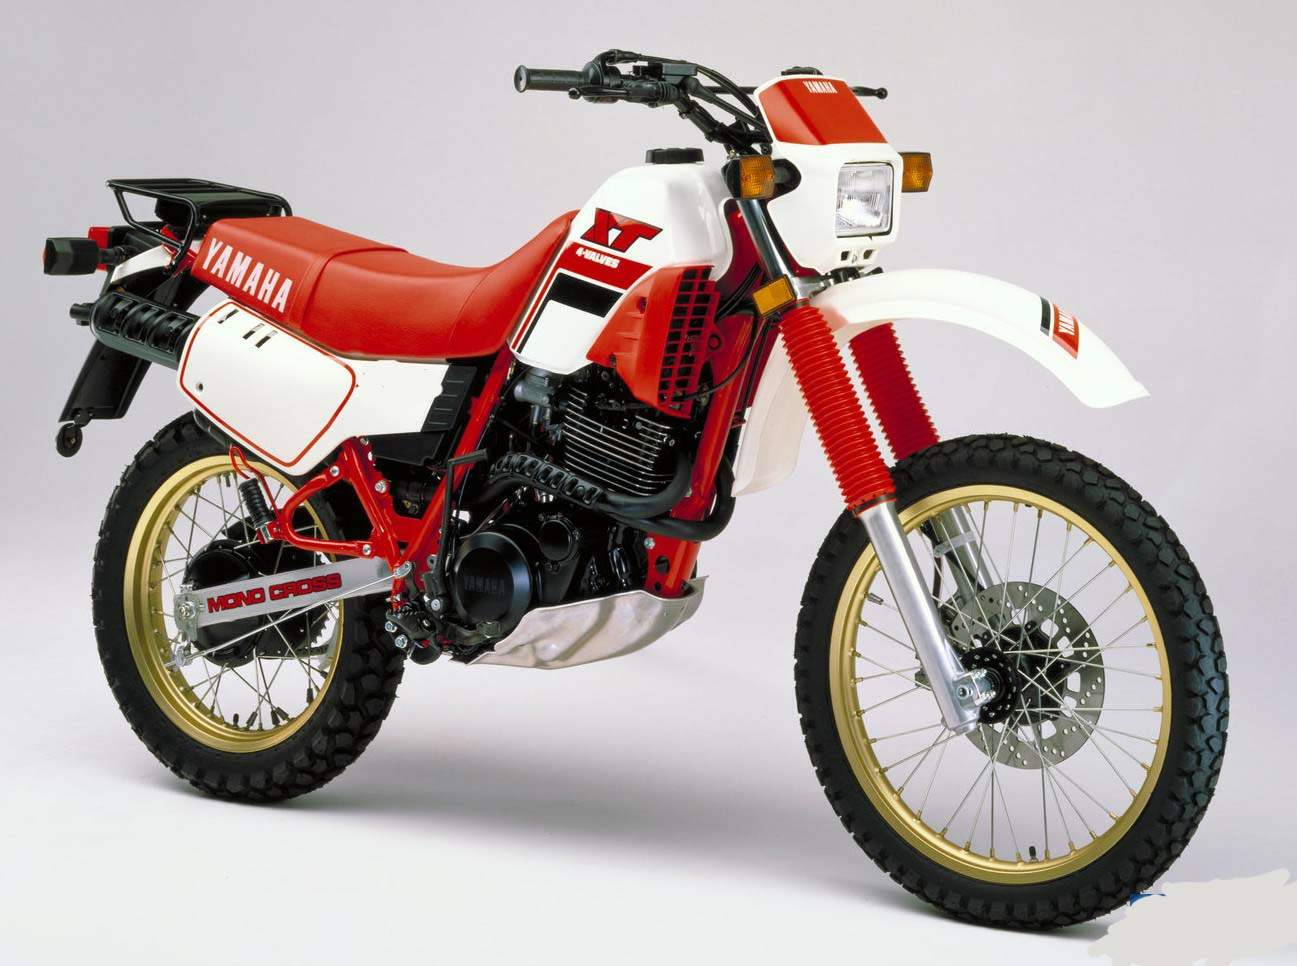 Мотоцикл Yamaha XT 600 1986 фото